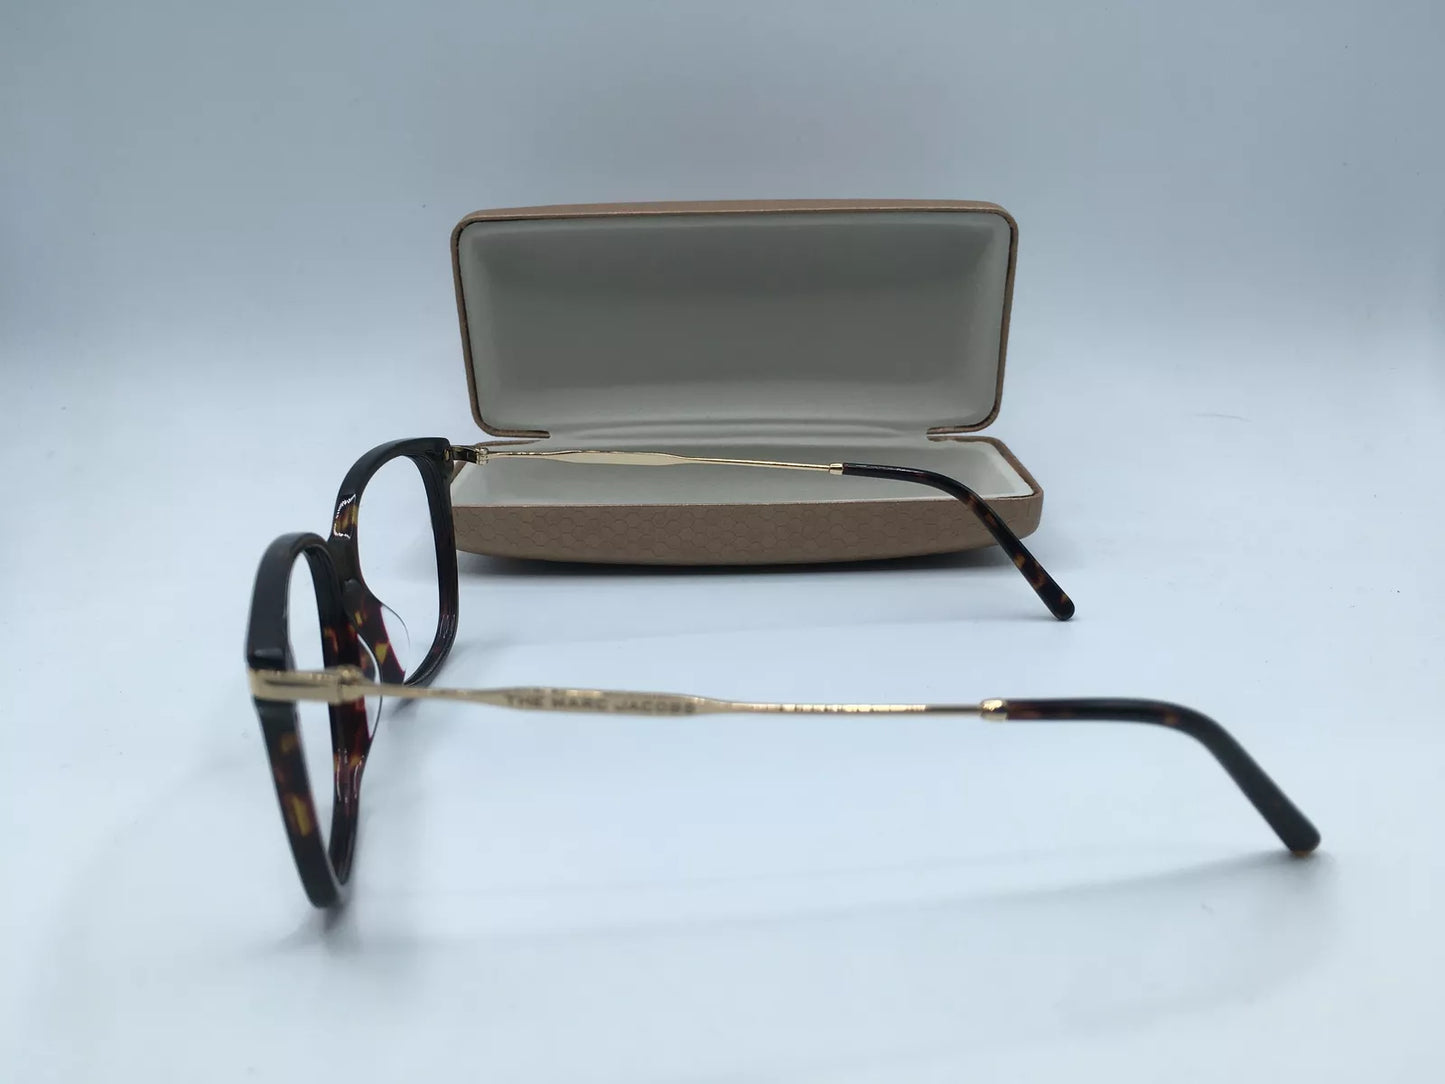 Marc Jacobs MARC 562-0086 00 54mm New Eyeglasses